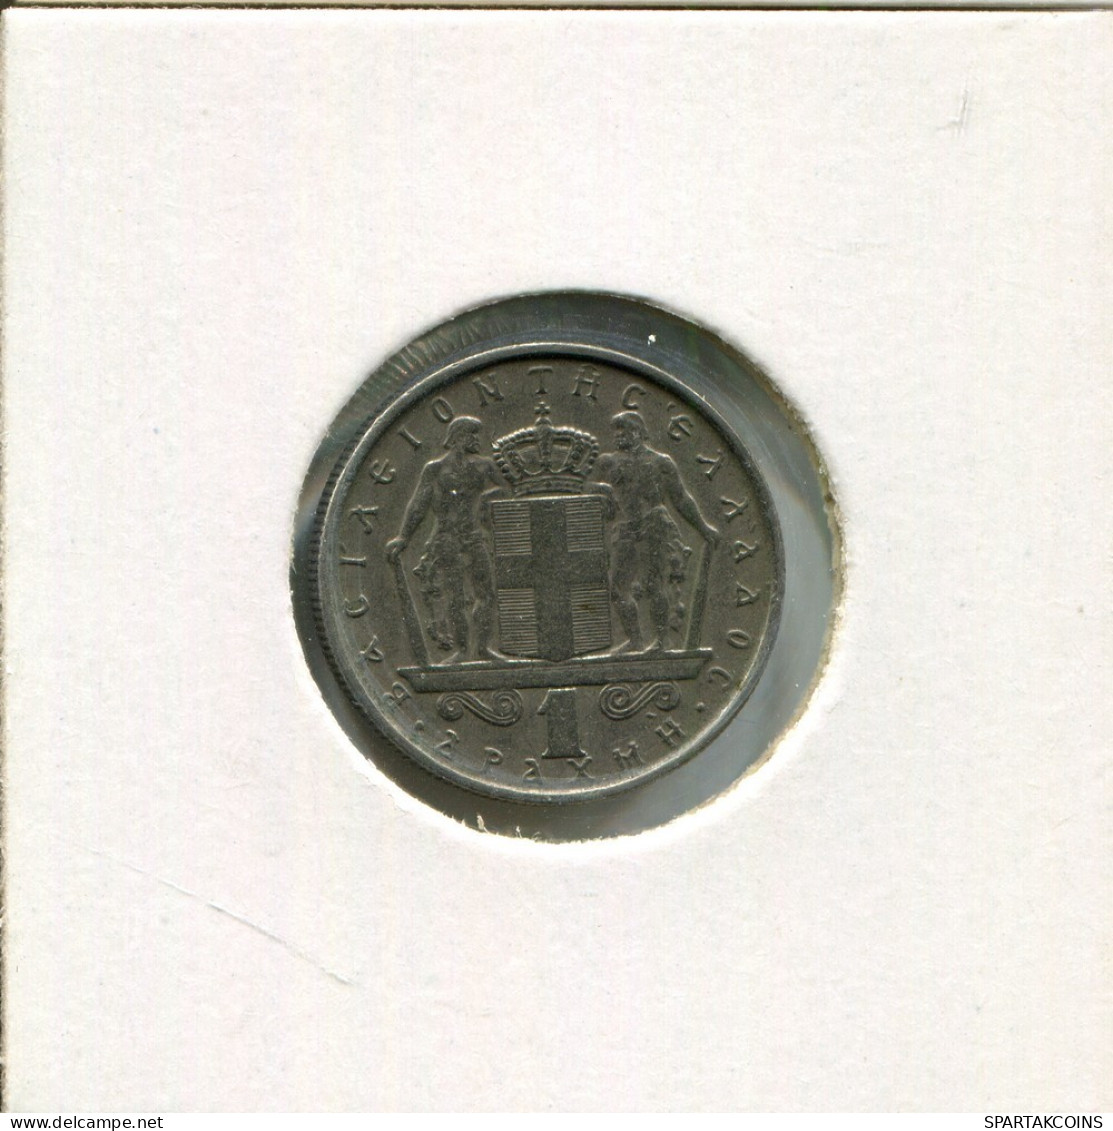 1 DRACHMA 1966 GRIECHENLAND GREECE Münze #AR344.D.A - Grecia